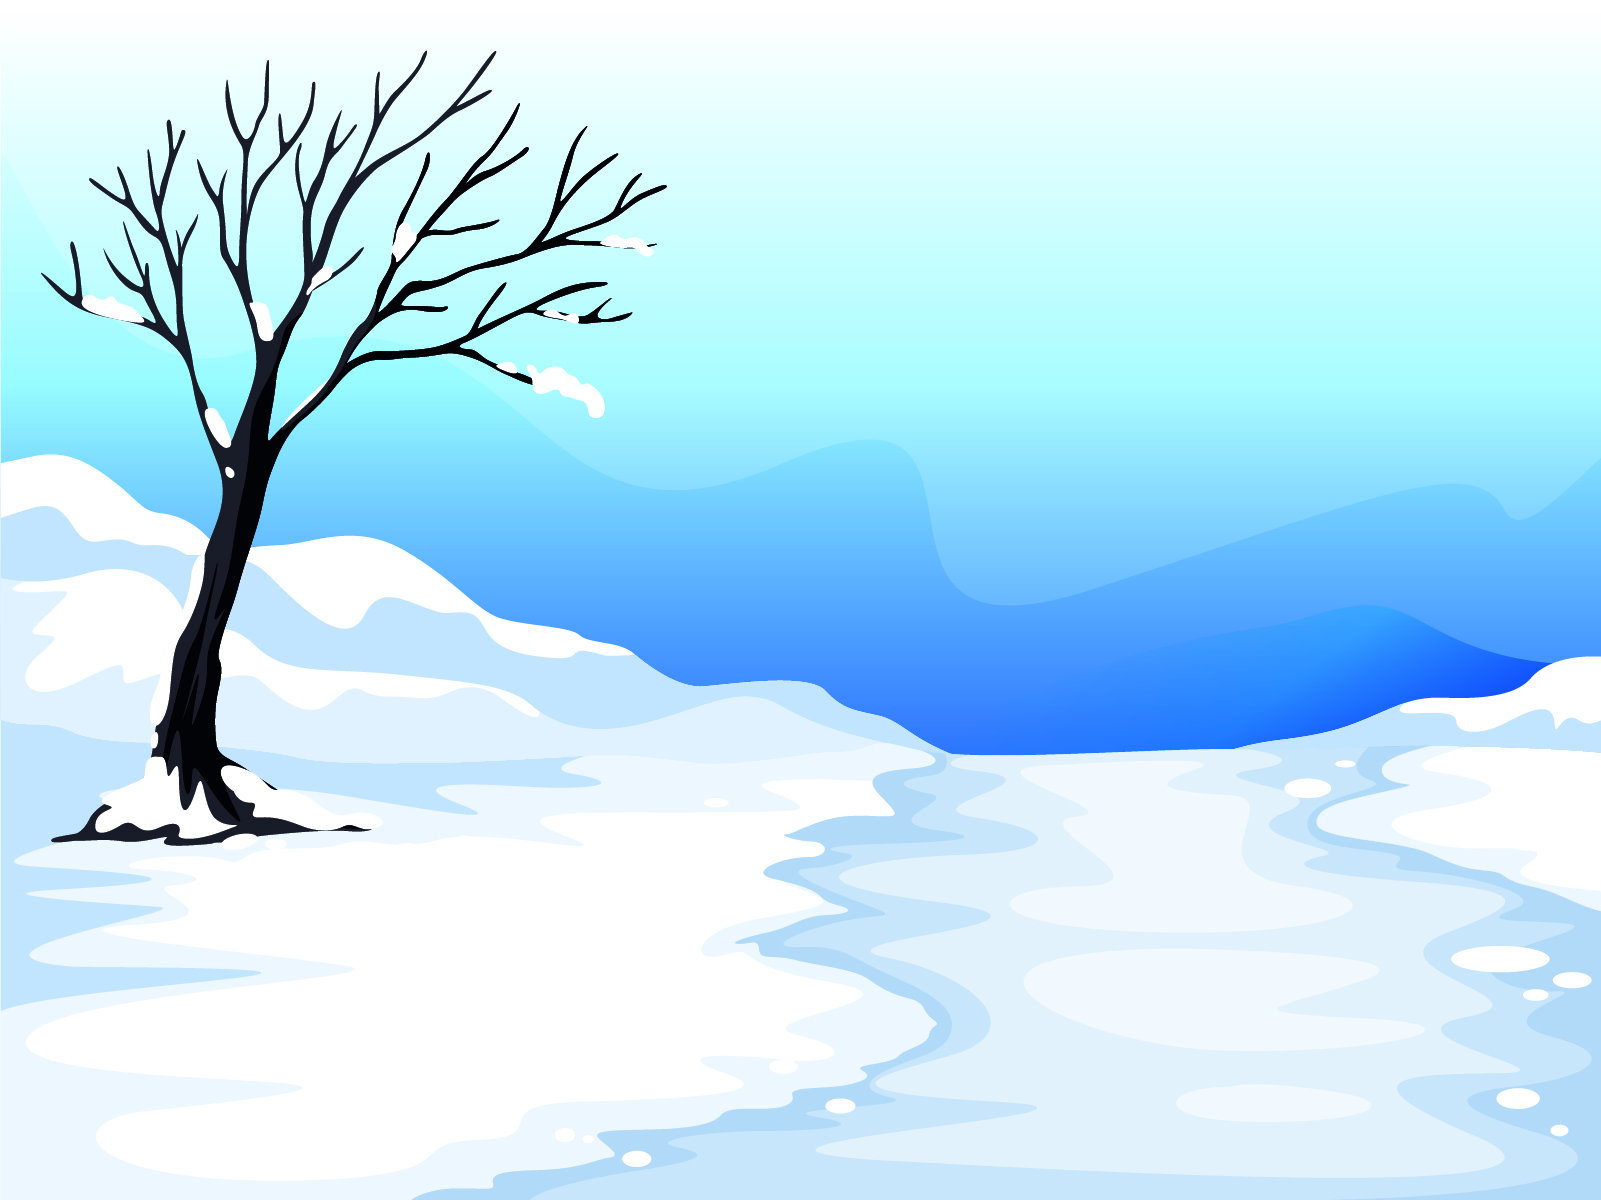 Snow and Tree Illustration PPT Backgrounds - 3D, Blue, Design ...